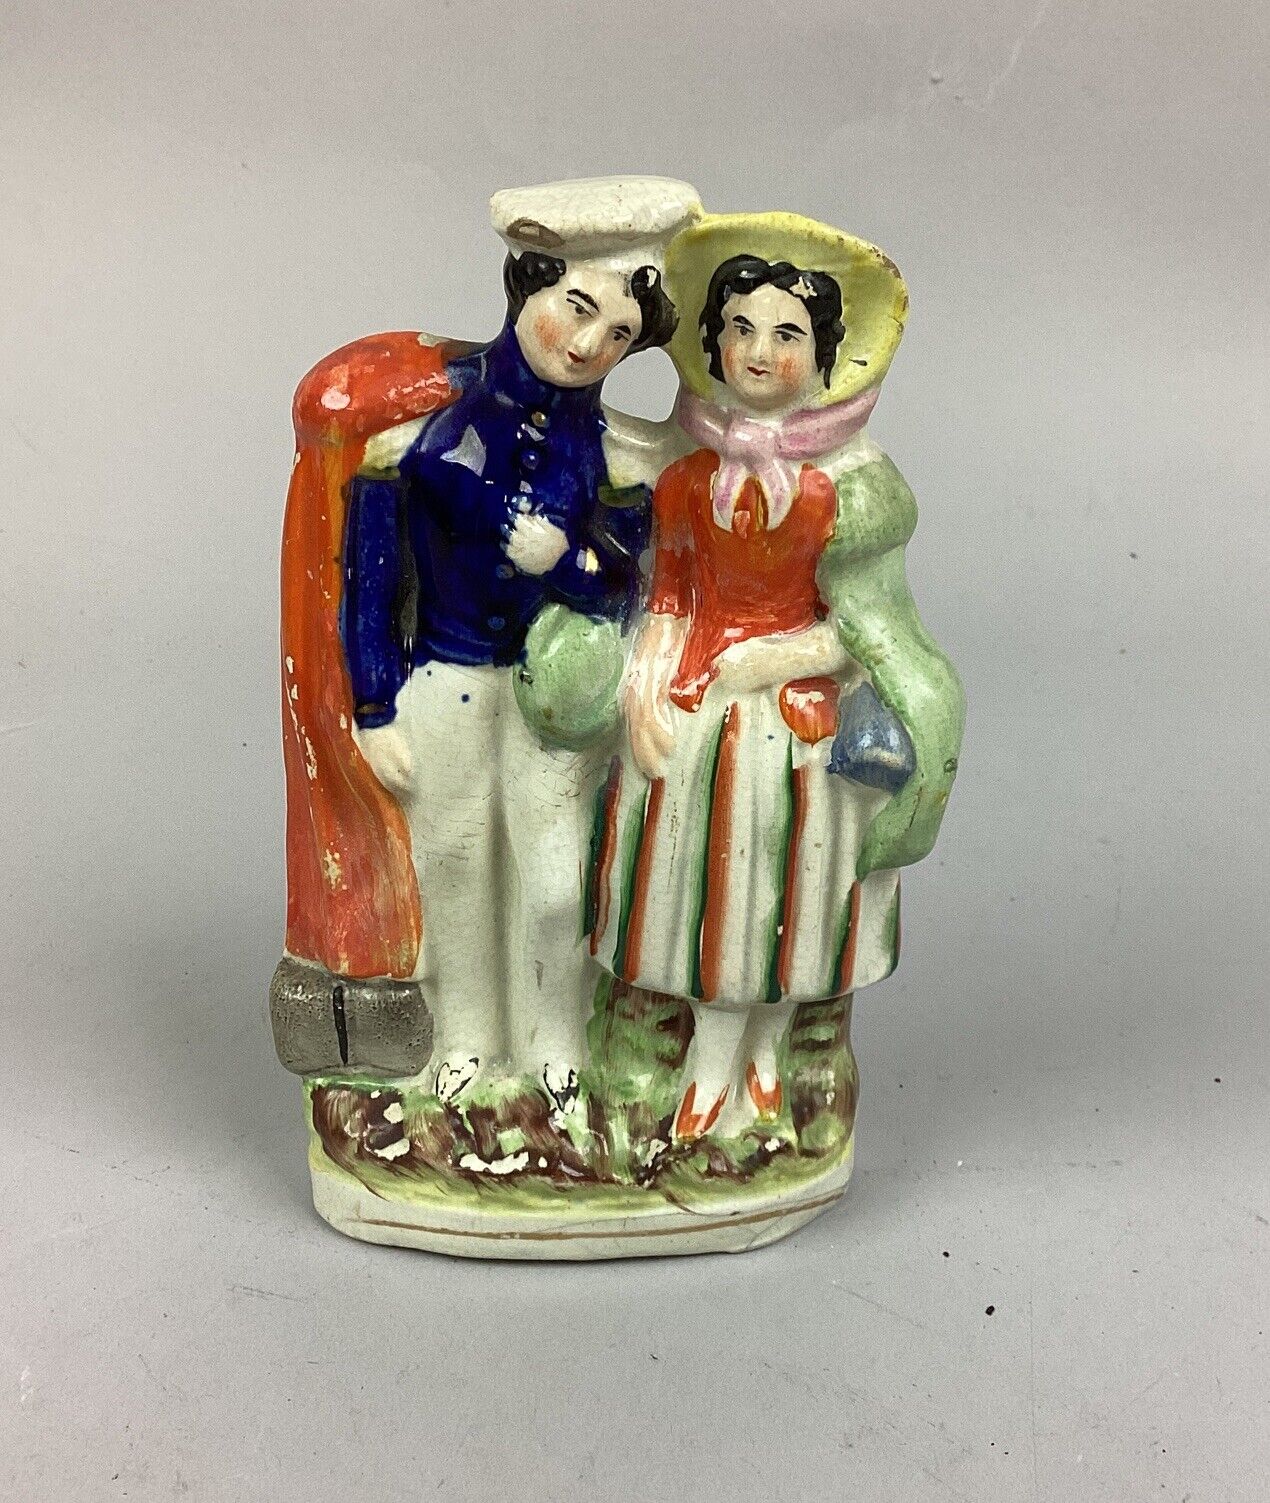 Antique Staffordshire Man & Woman Figurine - 7”H